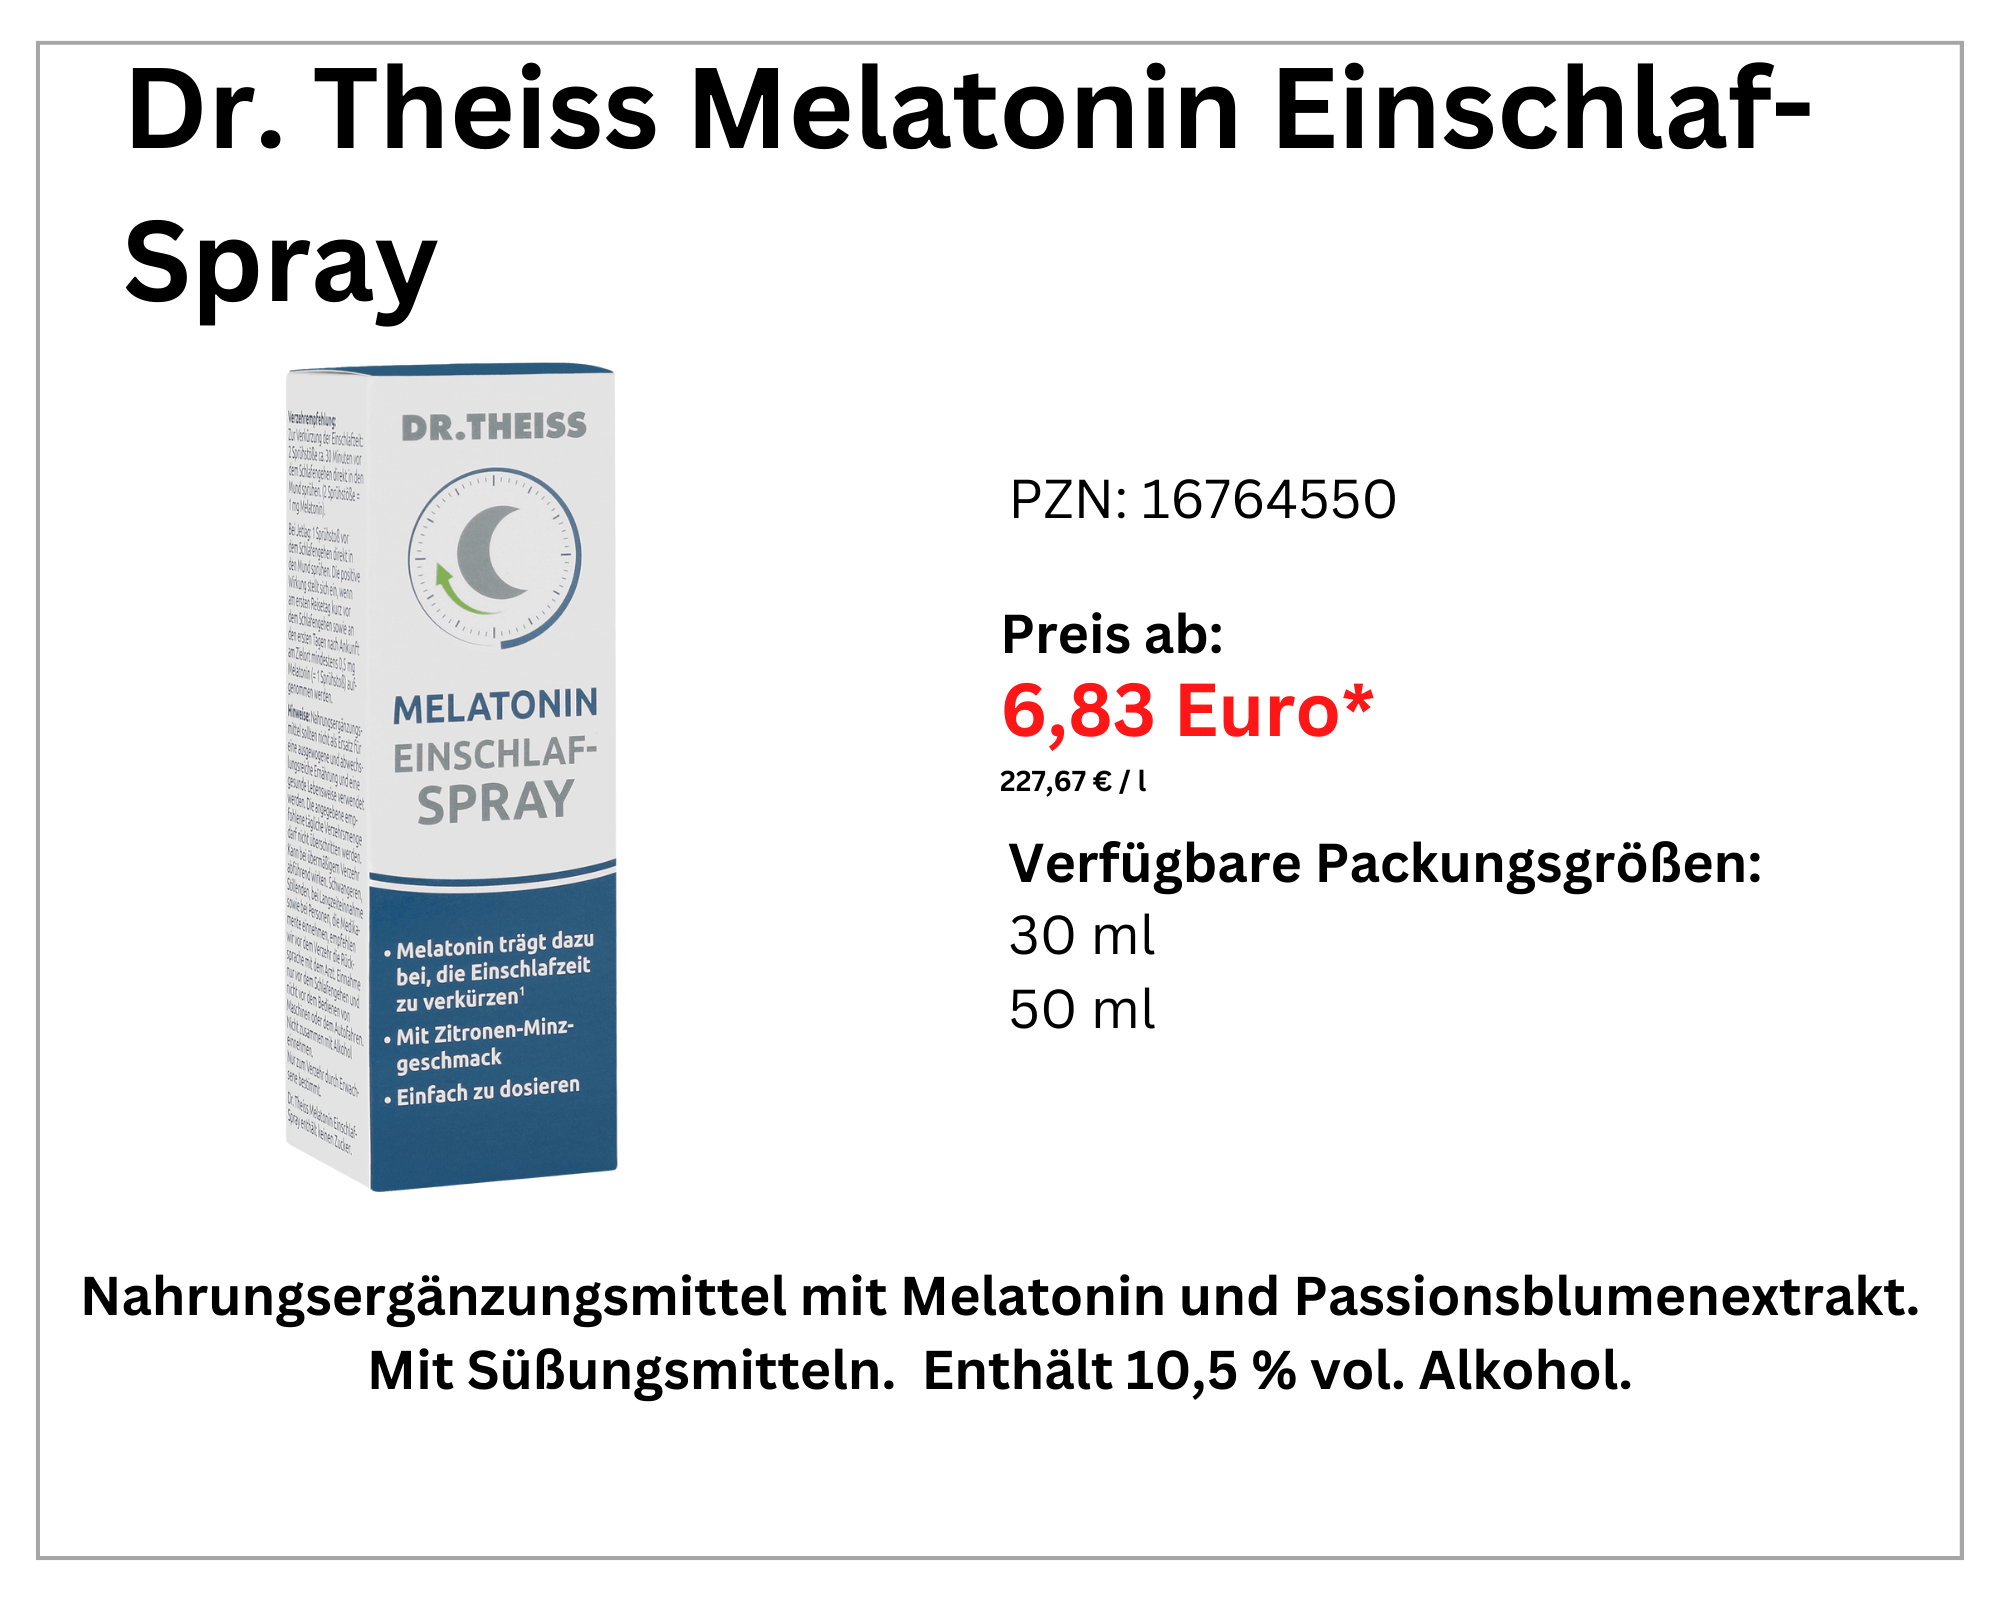  Dr. Theiss melatonin Einschlaf-Spray width=